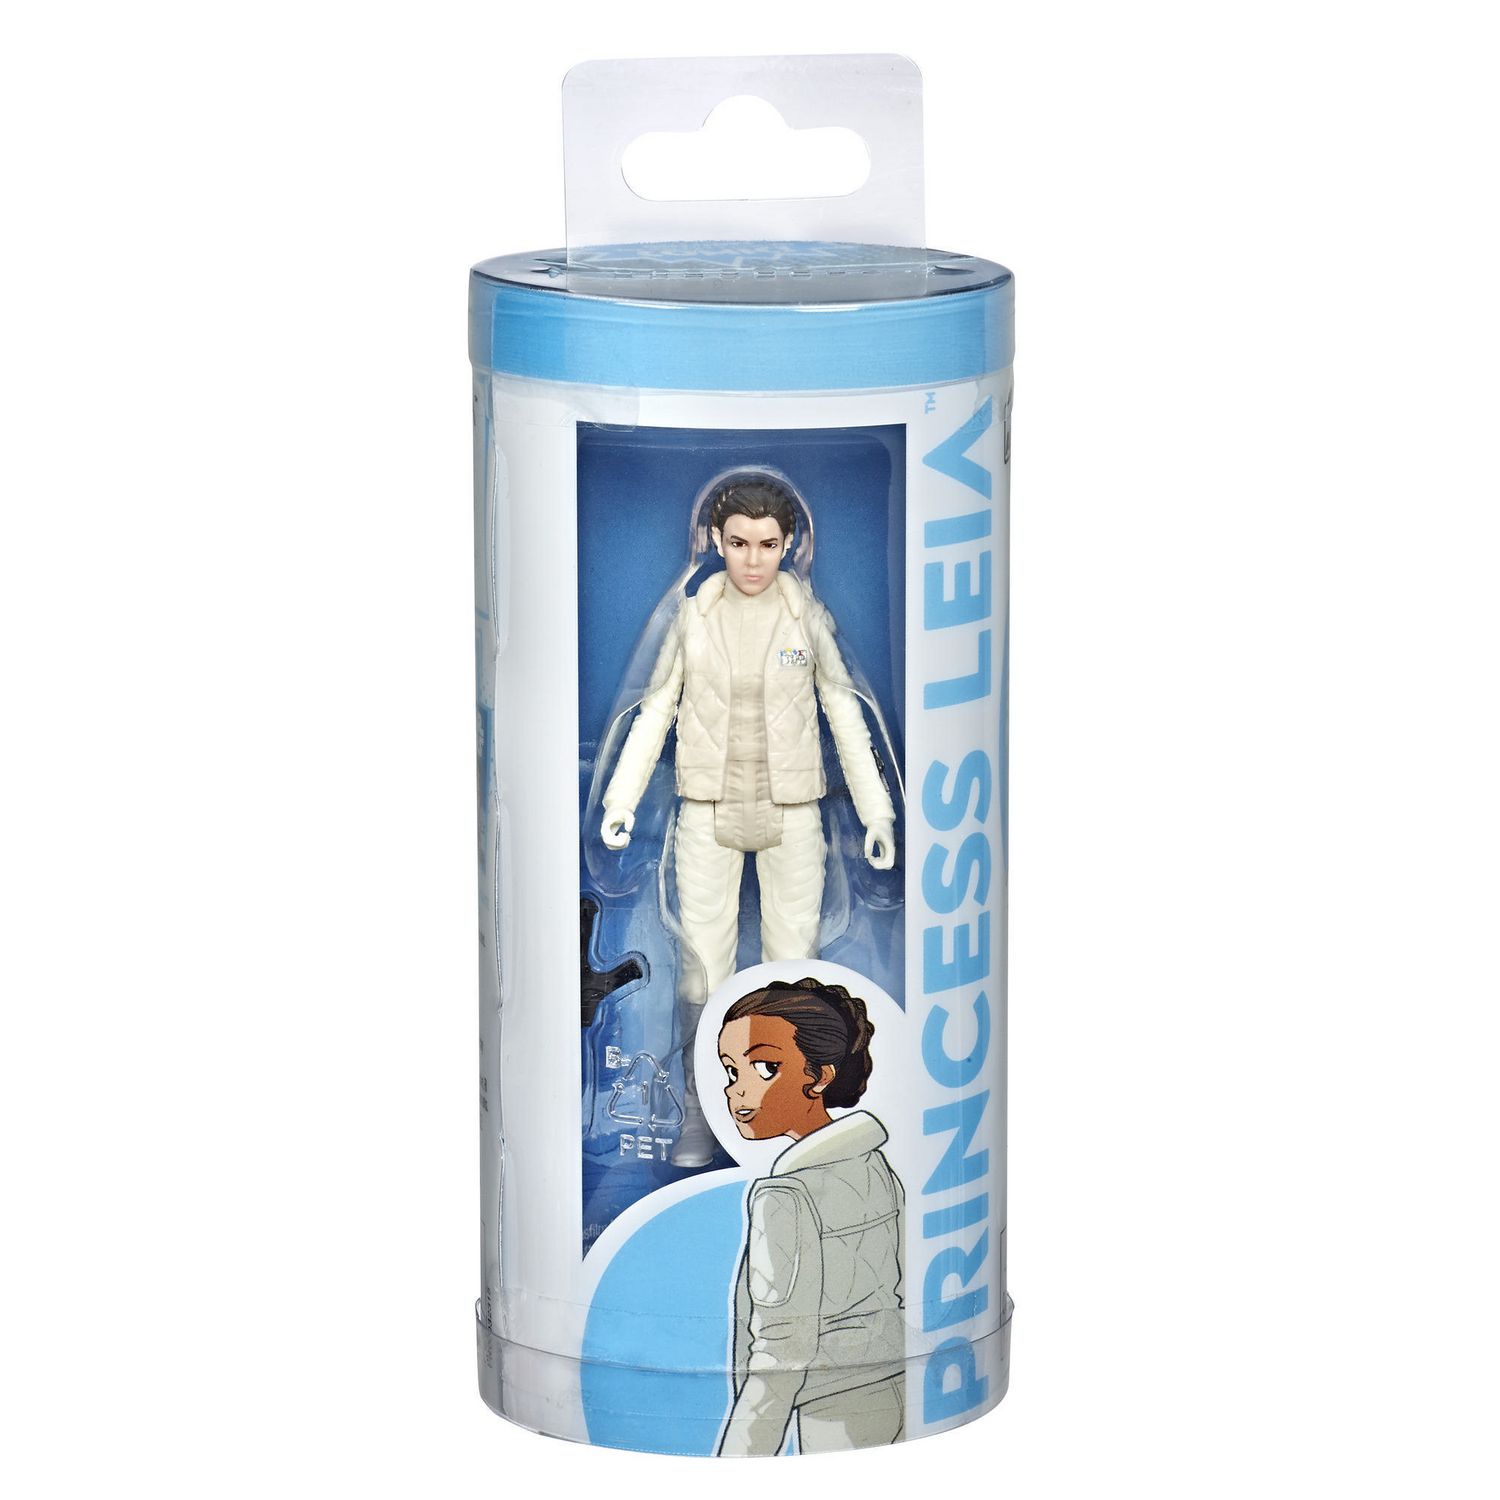 ❗Star Wars Galaxy of Adventures Princess Leia & Han Solo Figures & Mini Comics